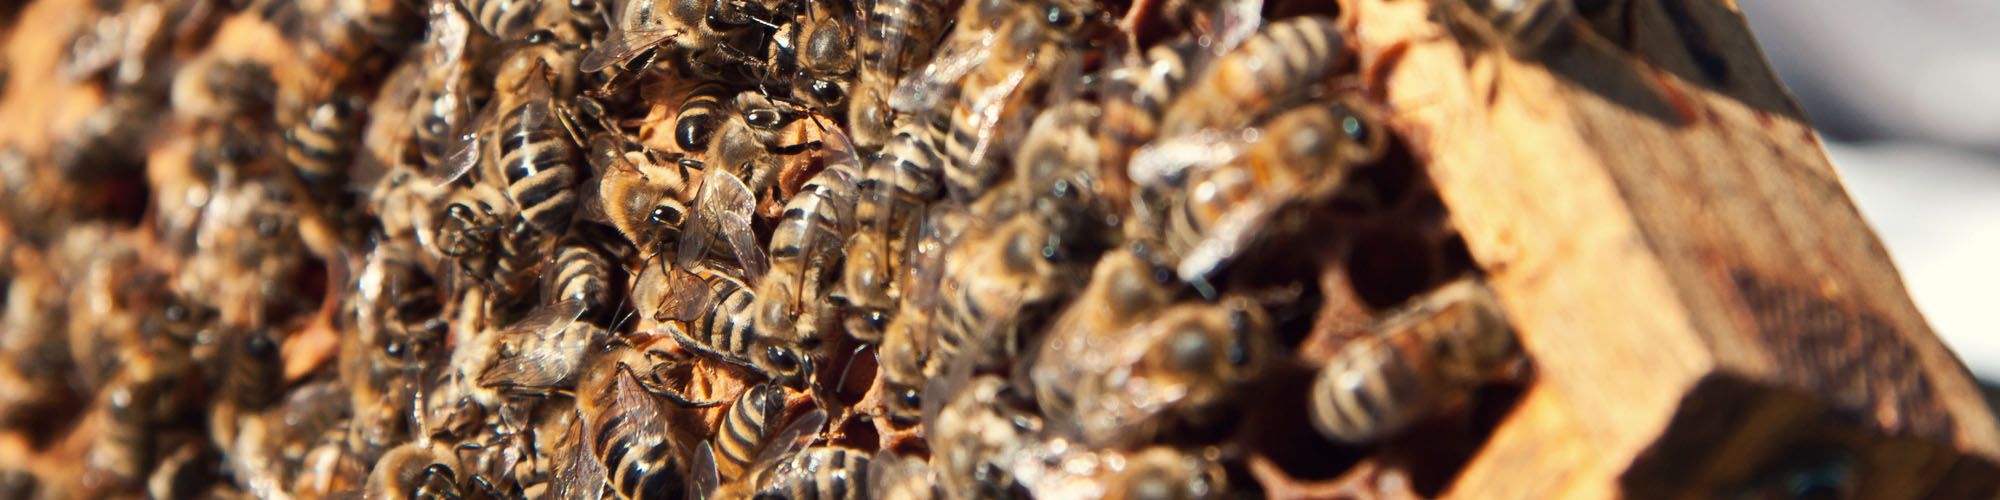 research-honeybee-virology